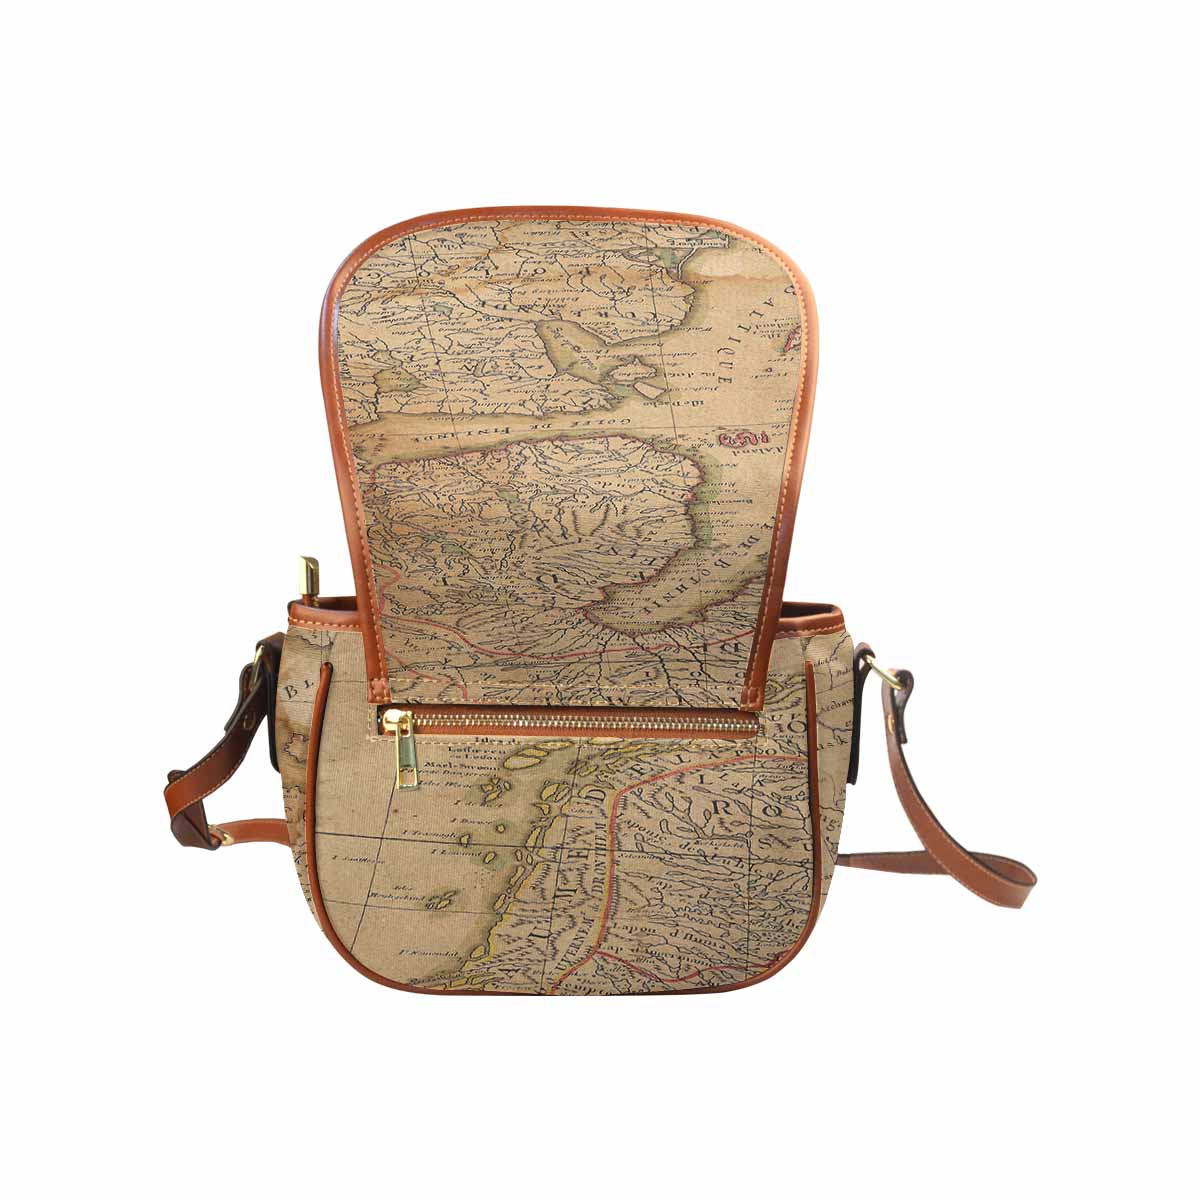 Antique Map design Handbag, saddle bag, Design 42